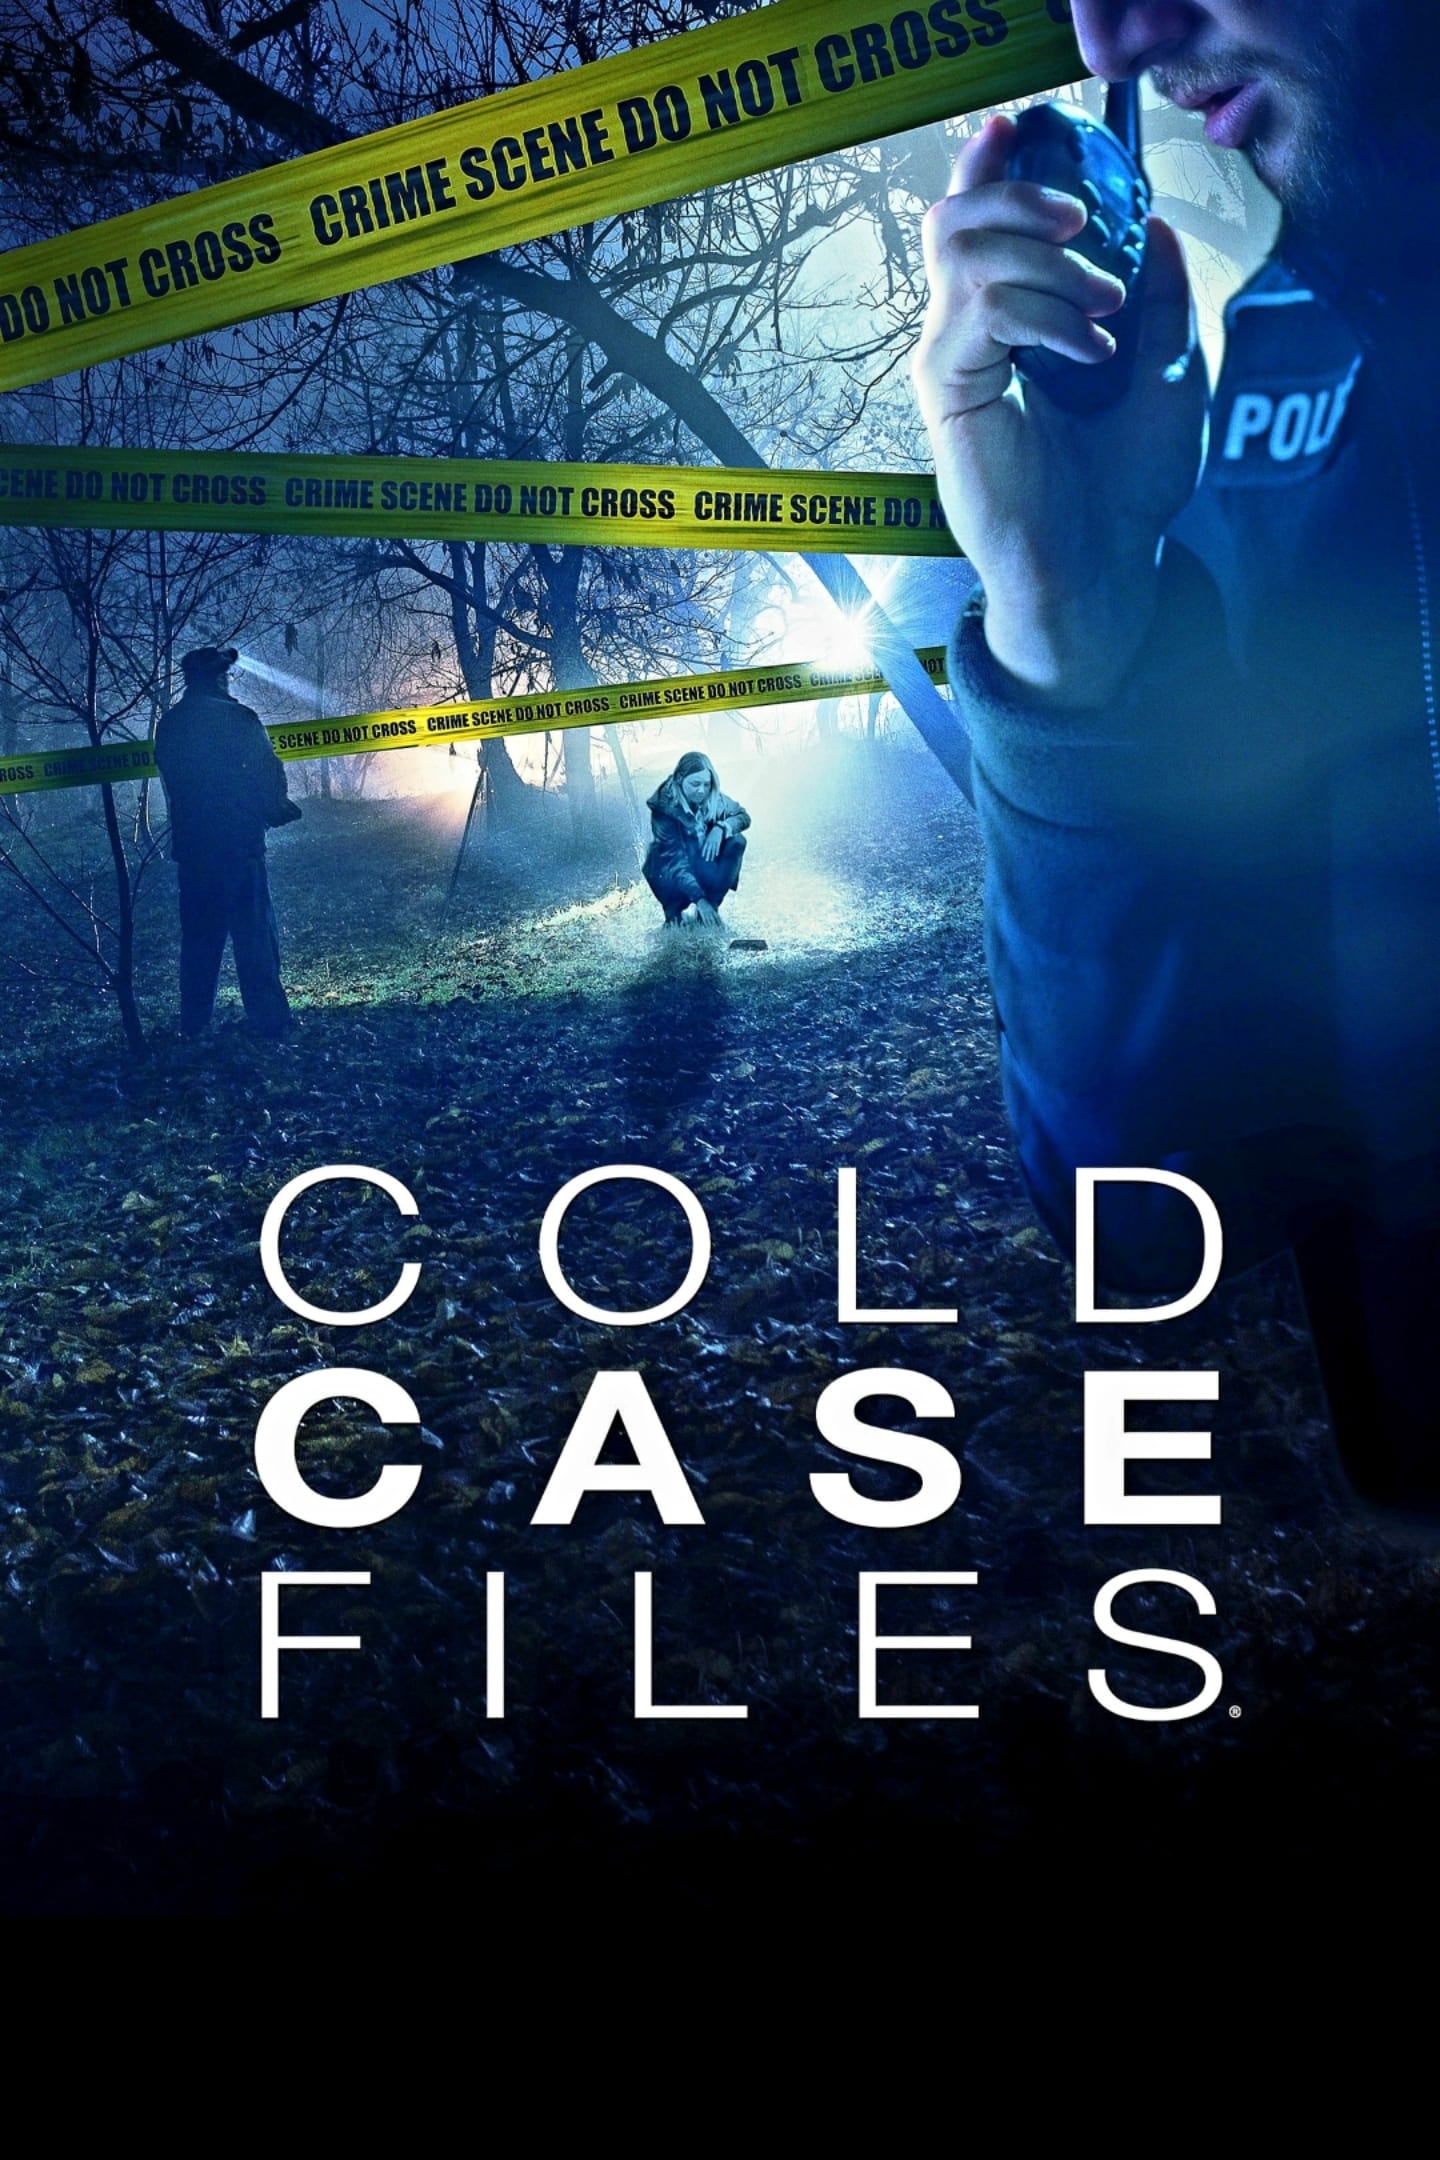 Cold Case Files TV Shows About Crime Scene